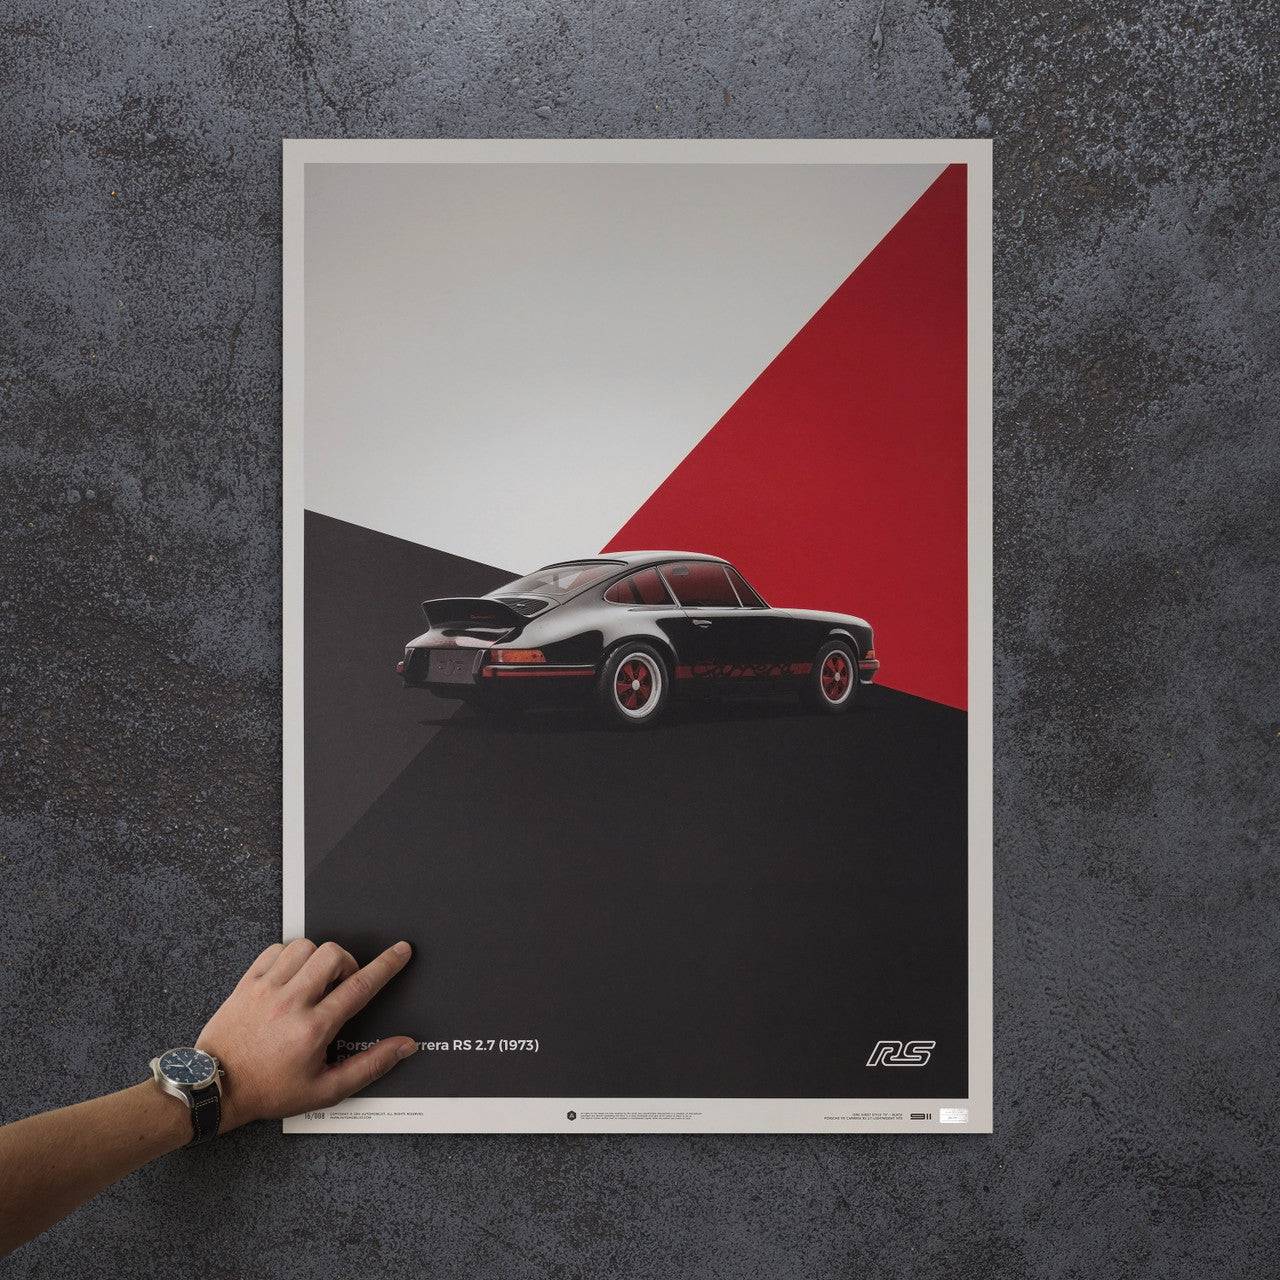 Porsche 911 RS - Black - Limited Poster